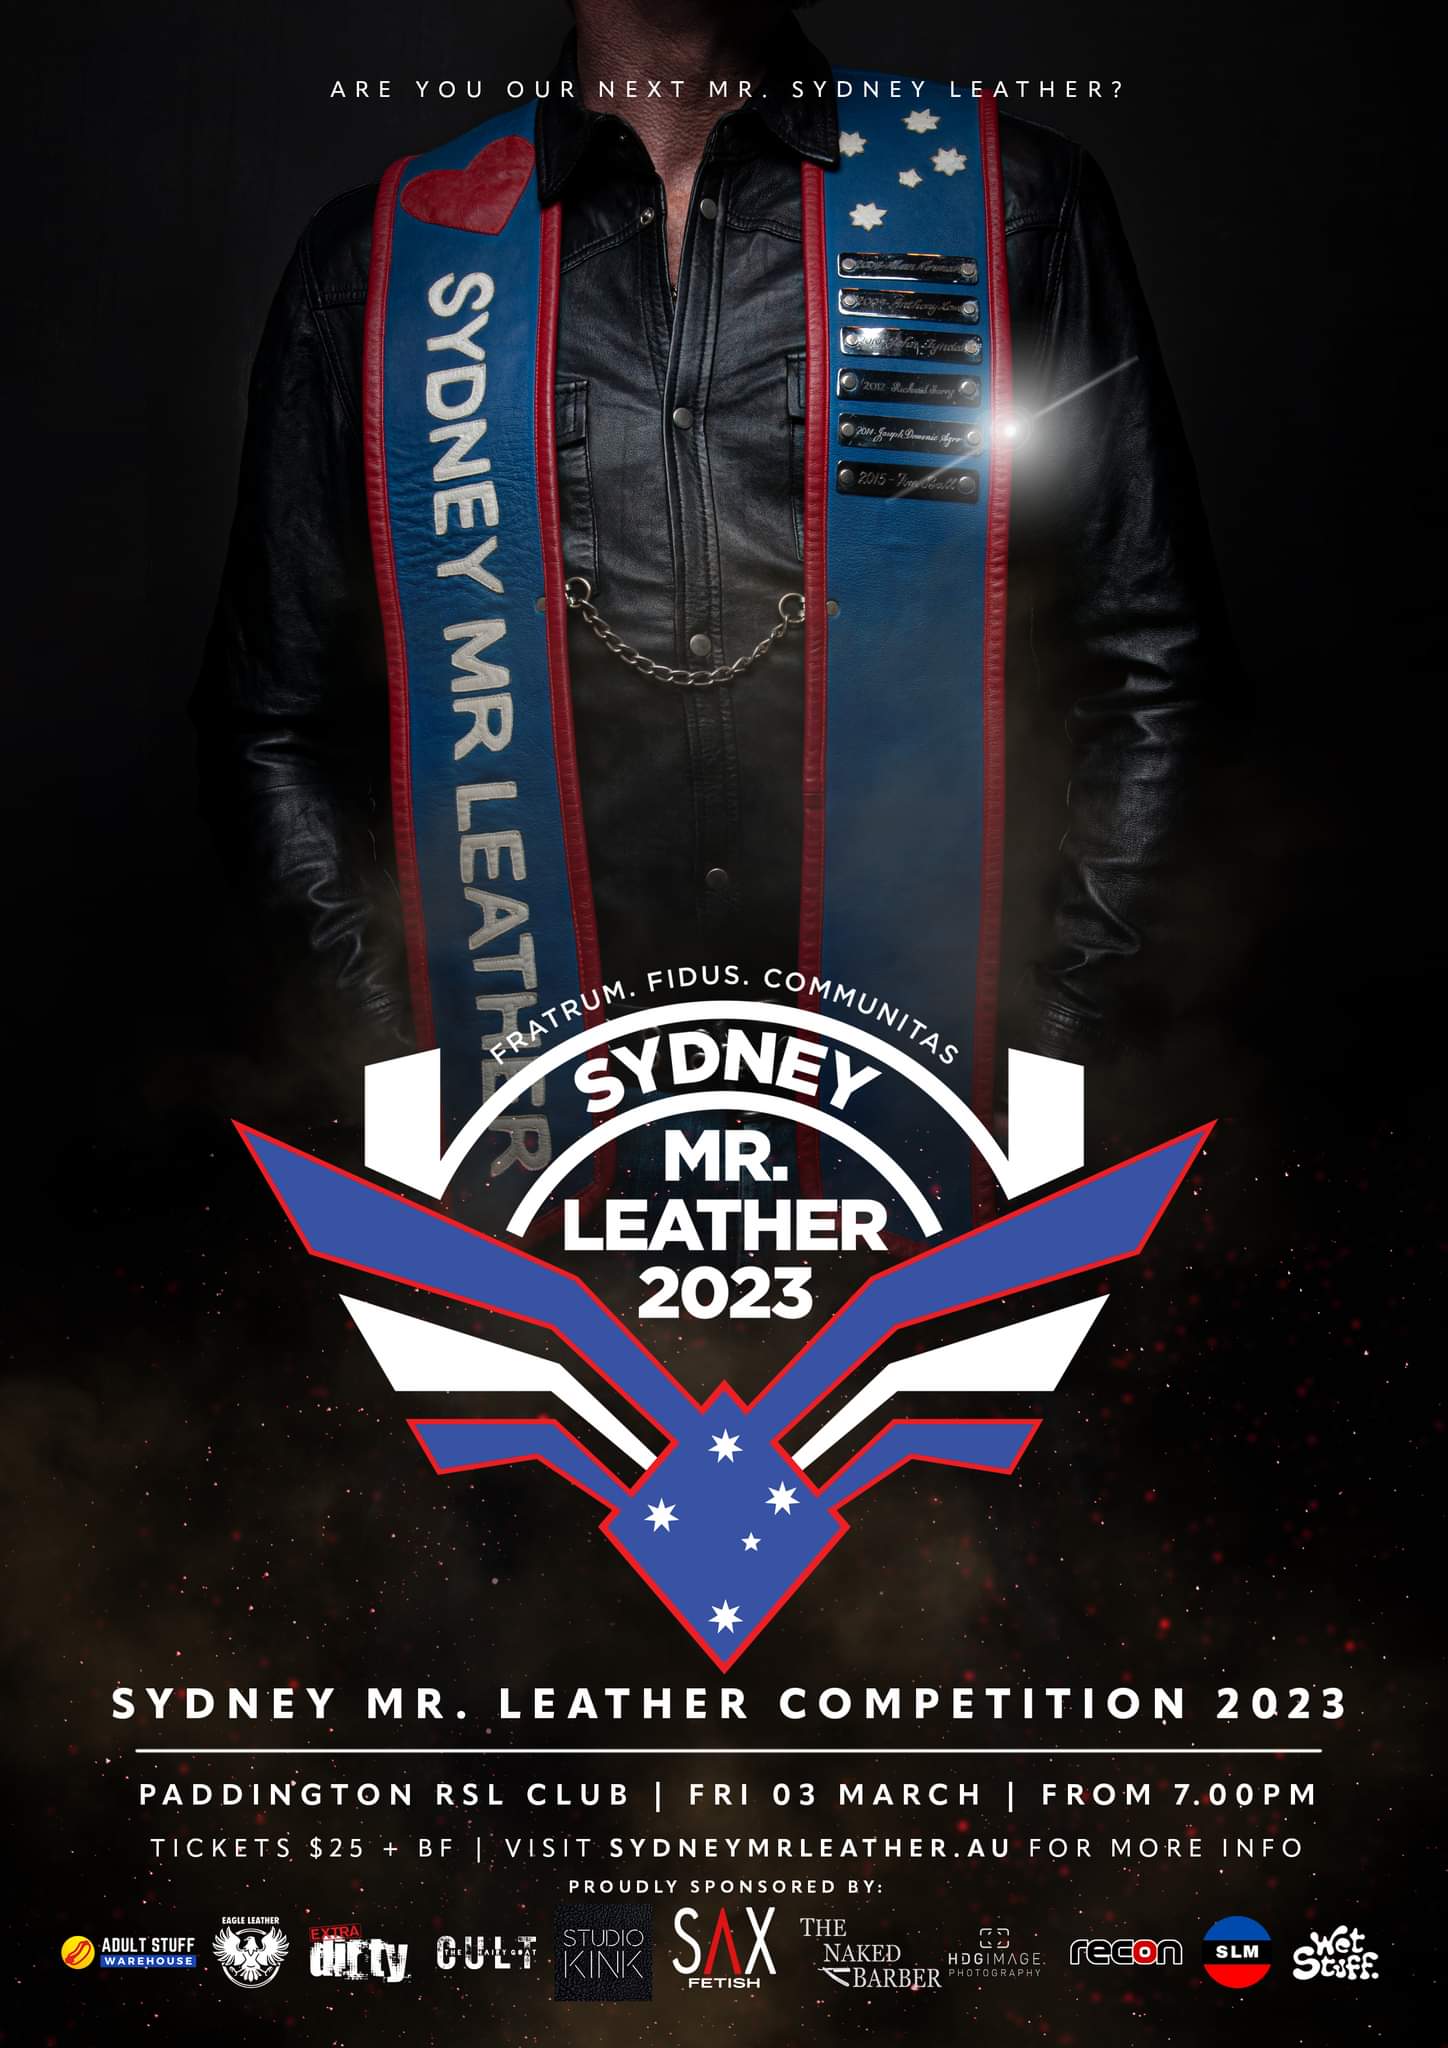 Sydney Mr. Leather 2023